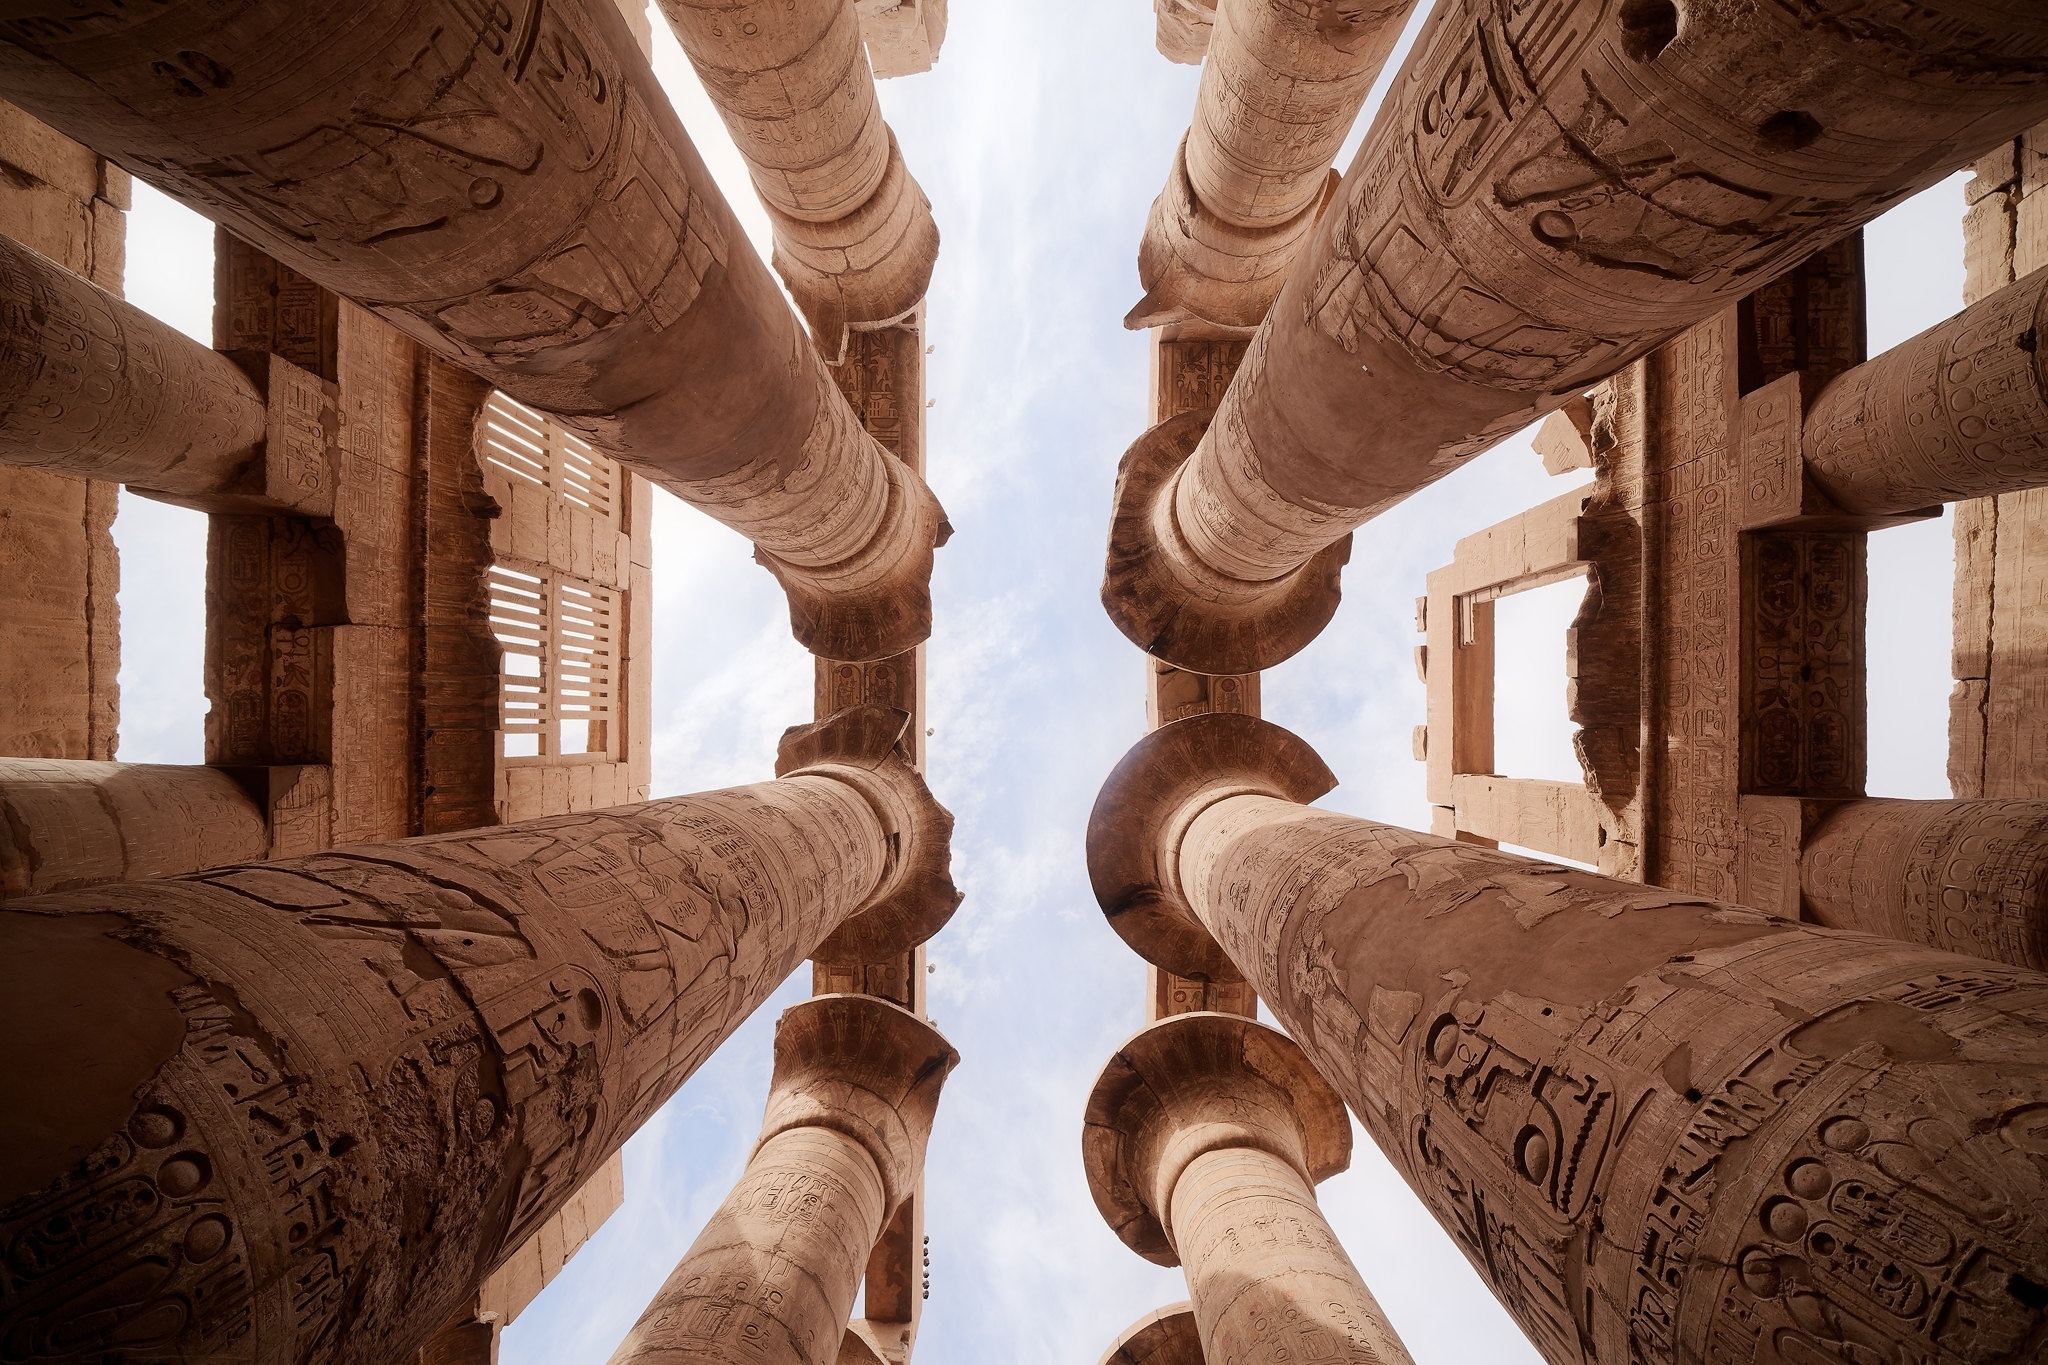 Luxor Temple, Egypt's HD wallpapers, Ancient wonders, Breathtaking landscapes, 2050x1370 HD Desktop